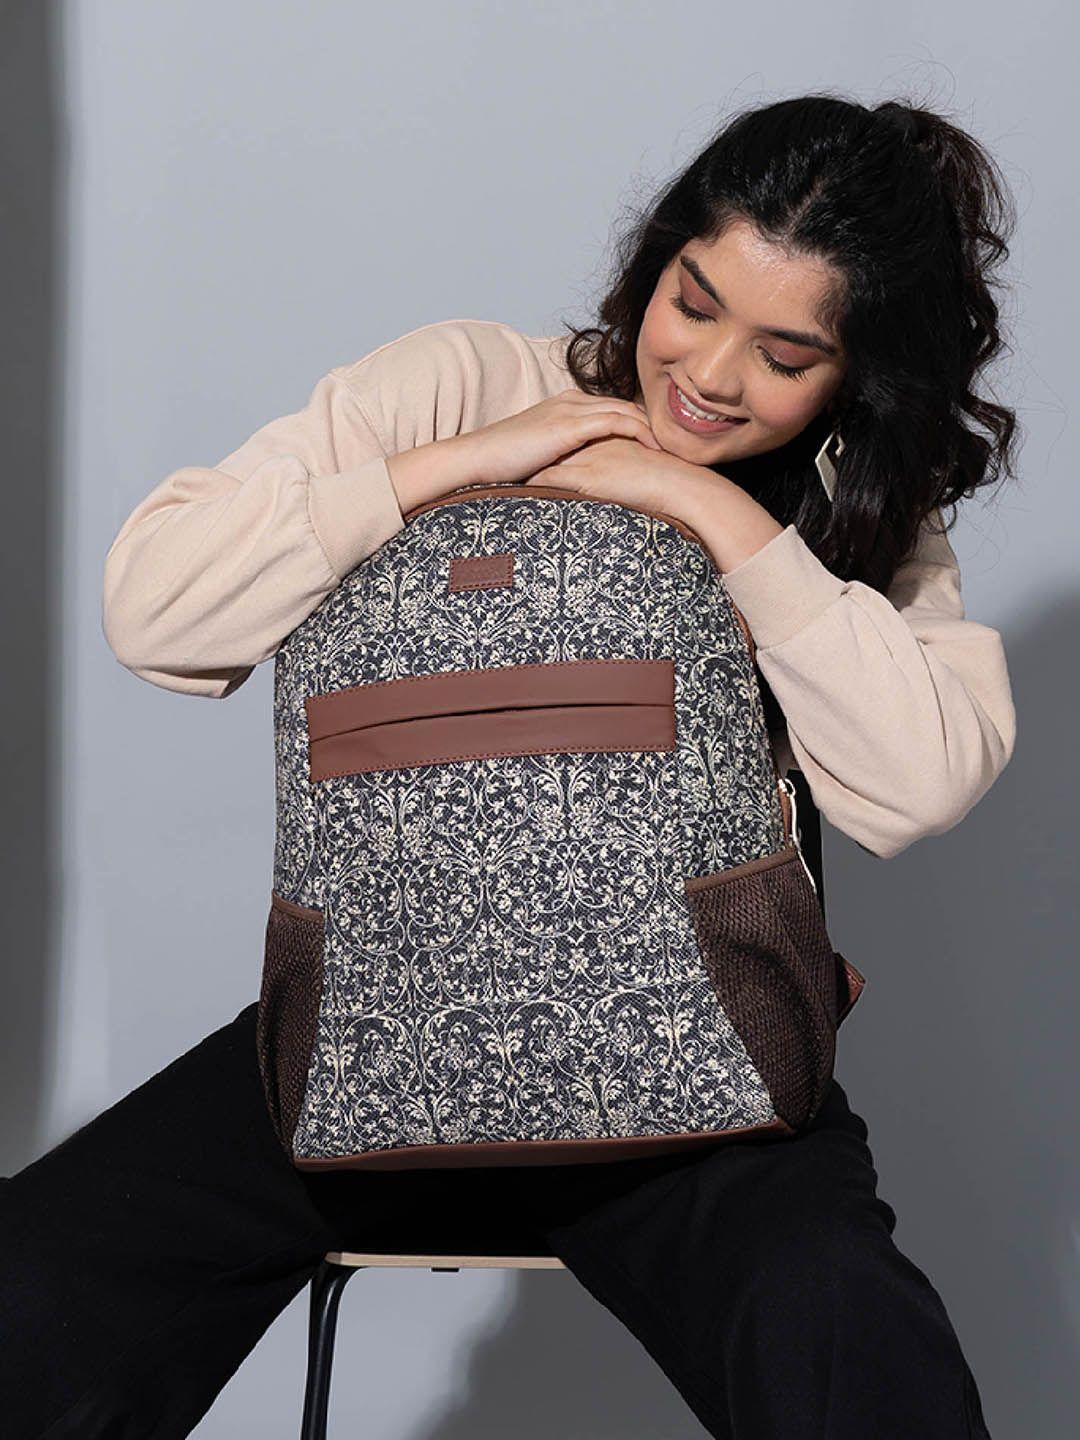 zouk women medium size backpack